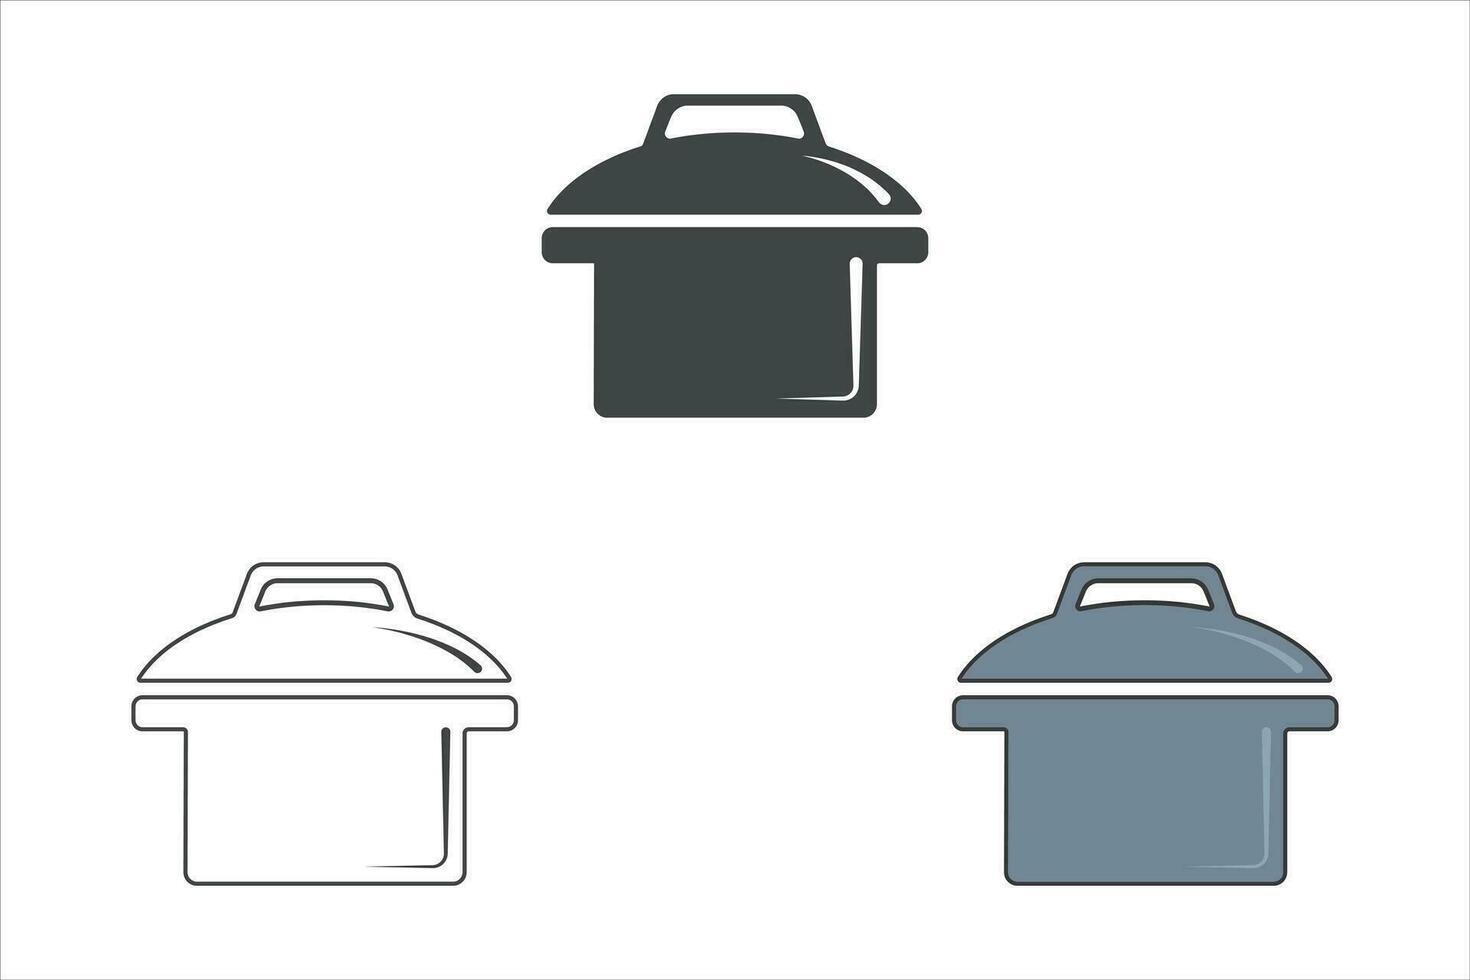 Cooking Pot, Cooking Pot Silhouette, Restaurant Equipment, Cooking Equipment, Clip Art, Utensil SVG, Silhouette, Cooking Pot Vector, illustration vector